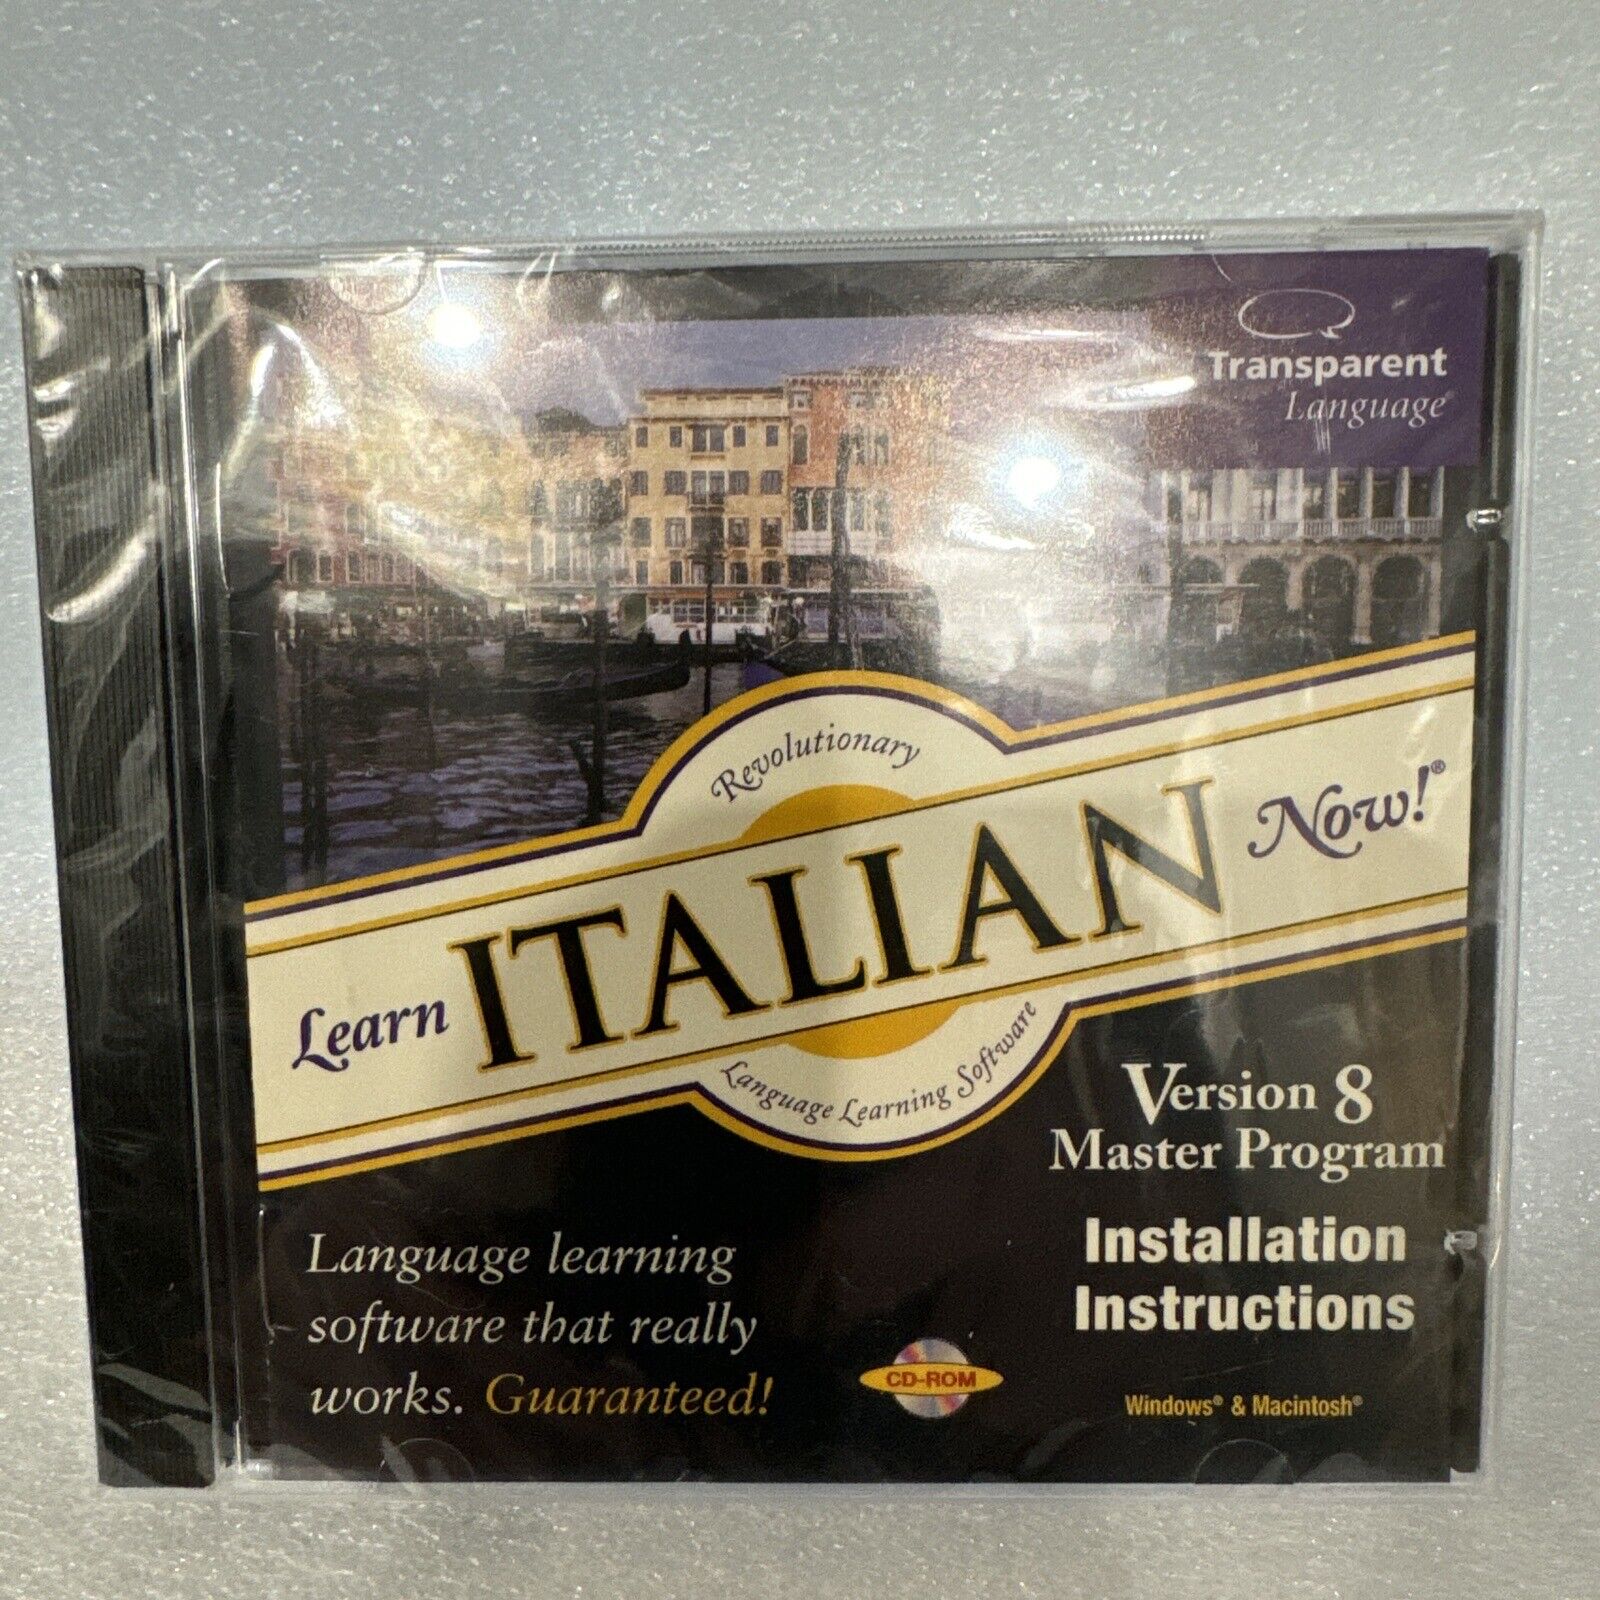 Revolutionary Learn Italian Now Version 8 Master Program Windows & Macintosh CD